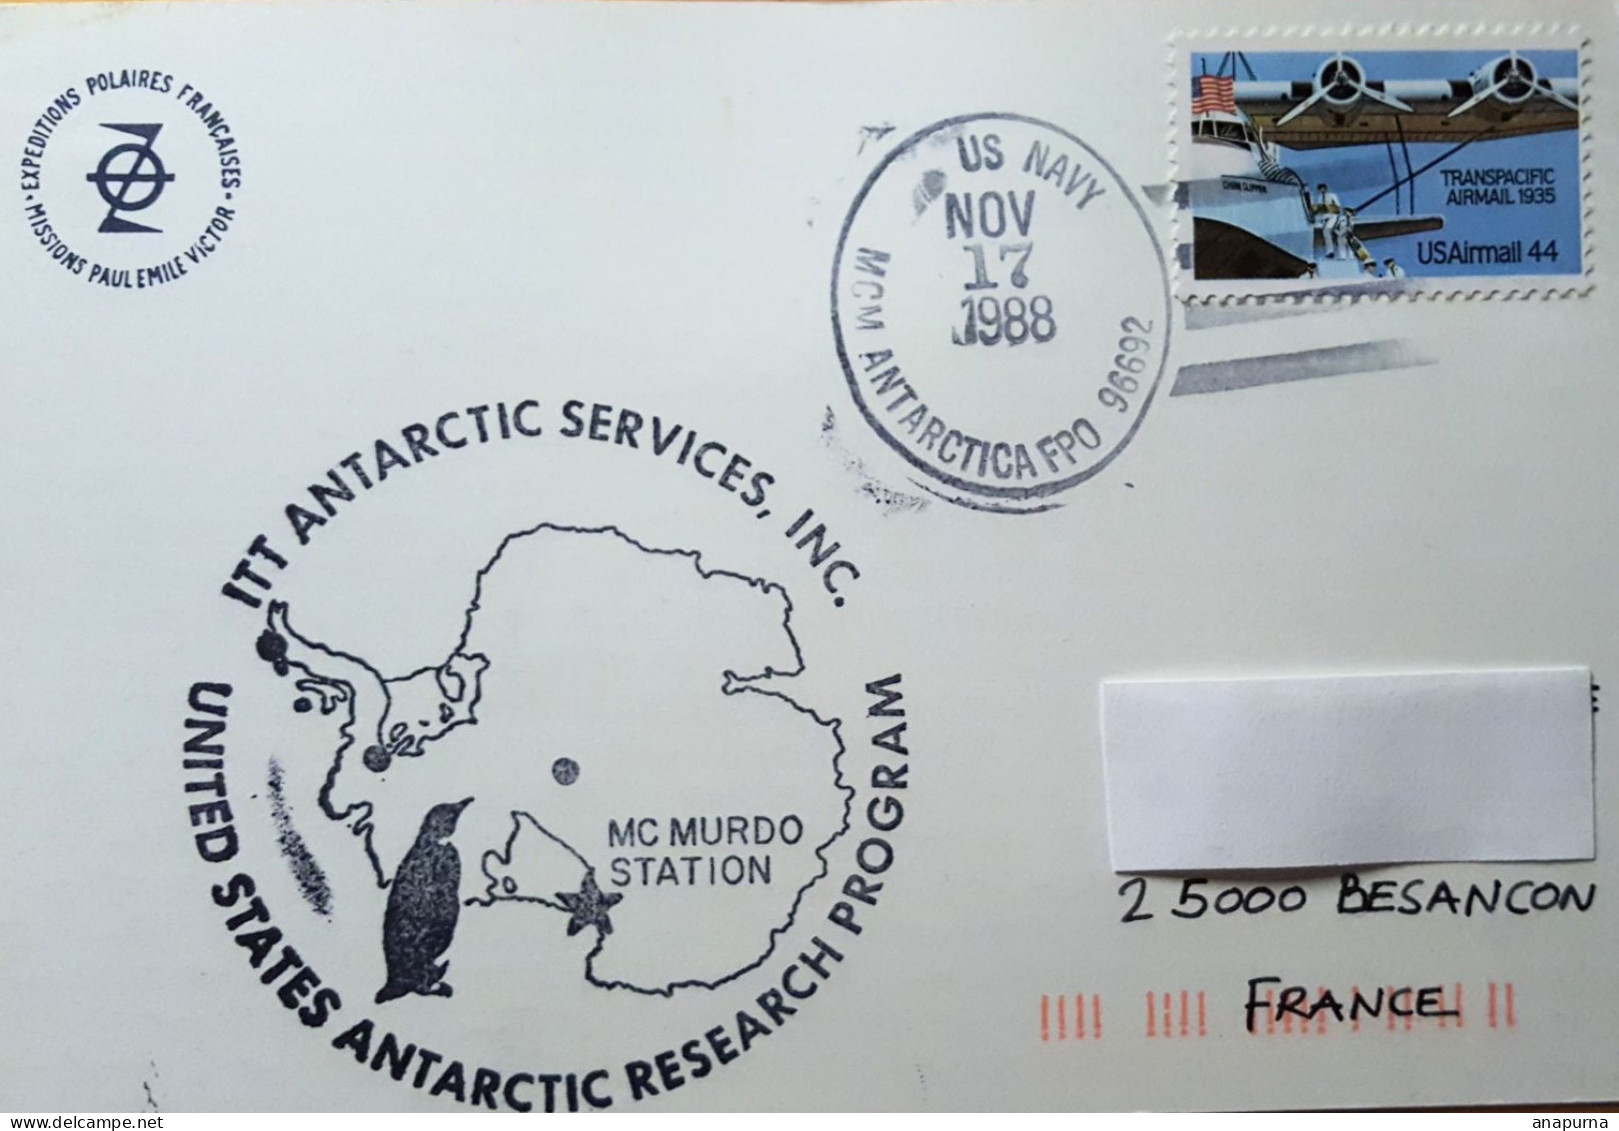 Carte Paul Emile Victor Postée à Mc Murdo 17 Nov 1988 Avec Grand Cachet Illustré US Antarctic Research Program - Forschungsprogramme